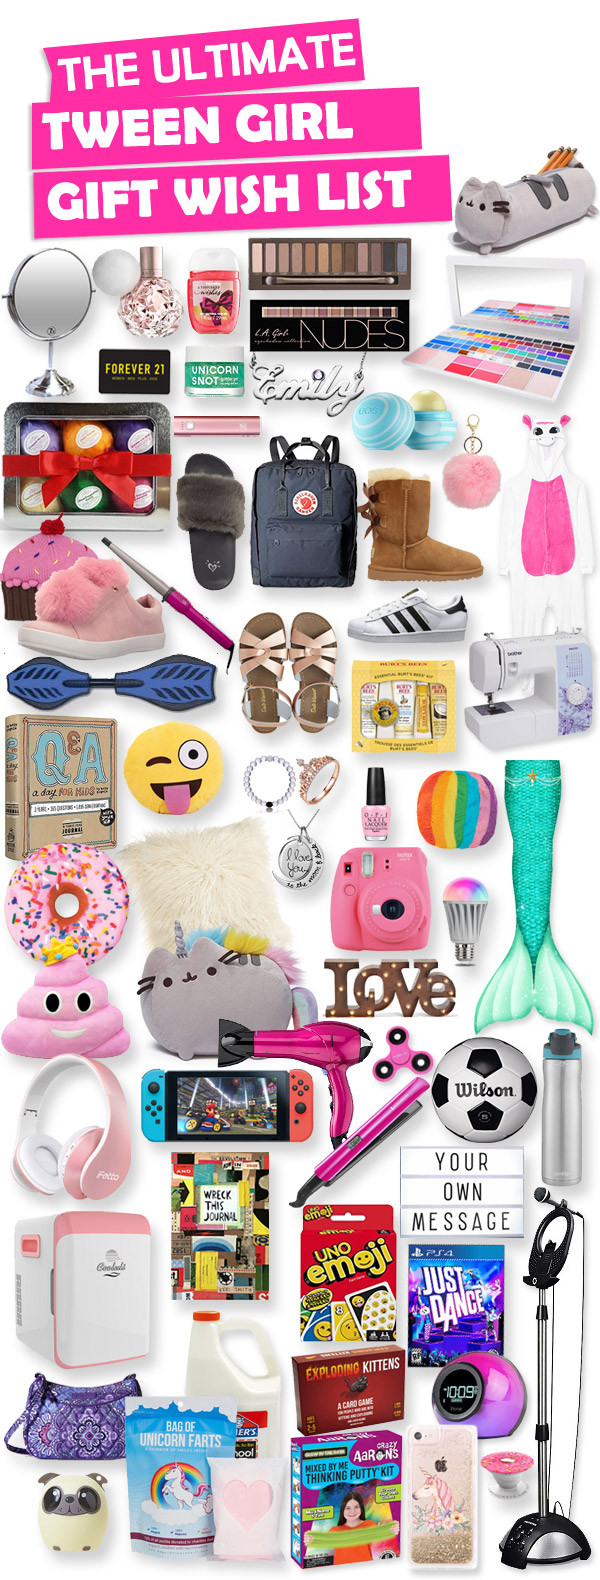 Birthday Gift Ideas For Tween Girl
 Gifts For Tween Girls